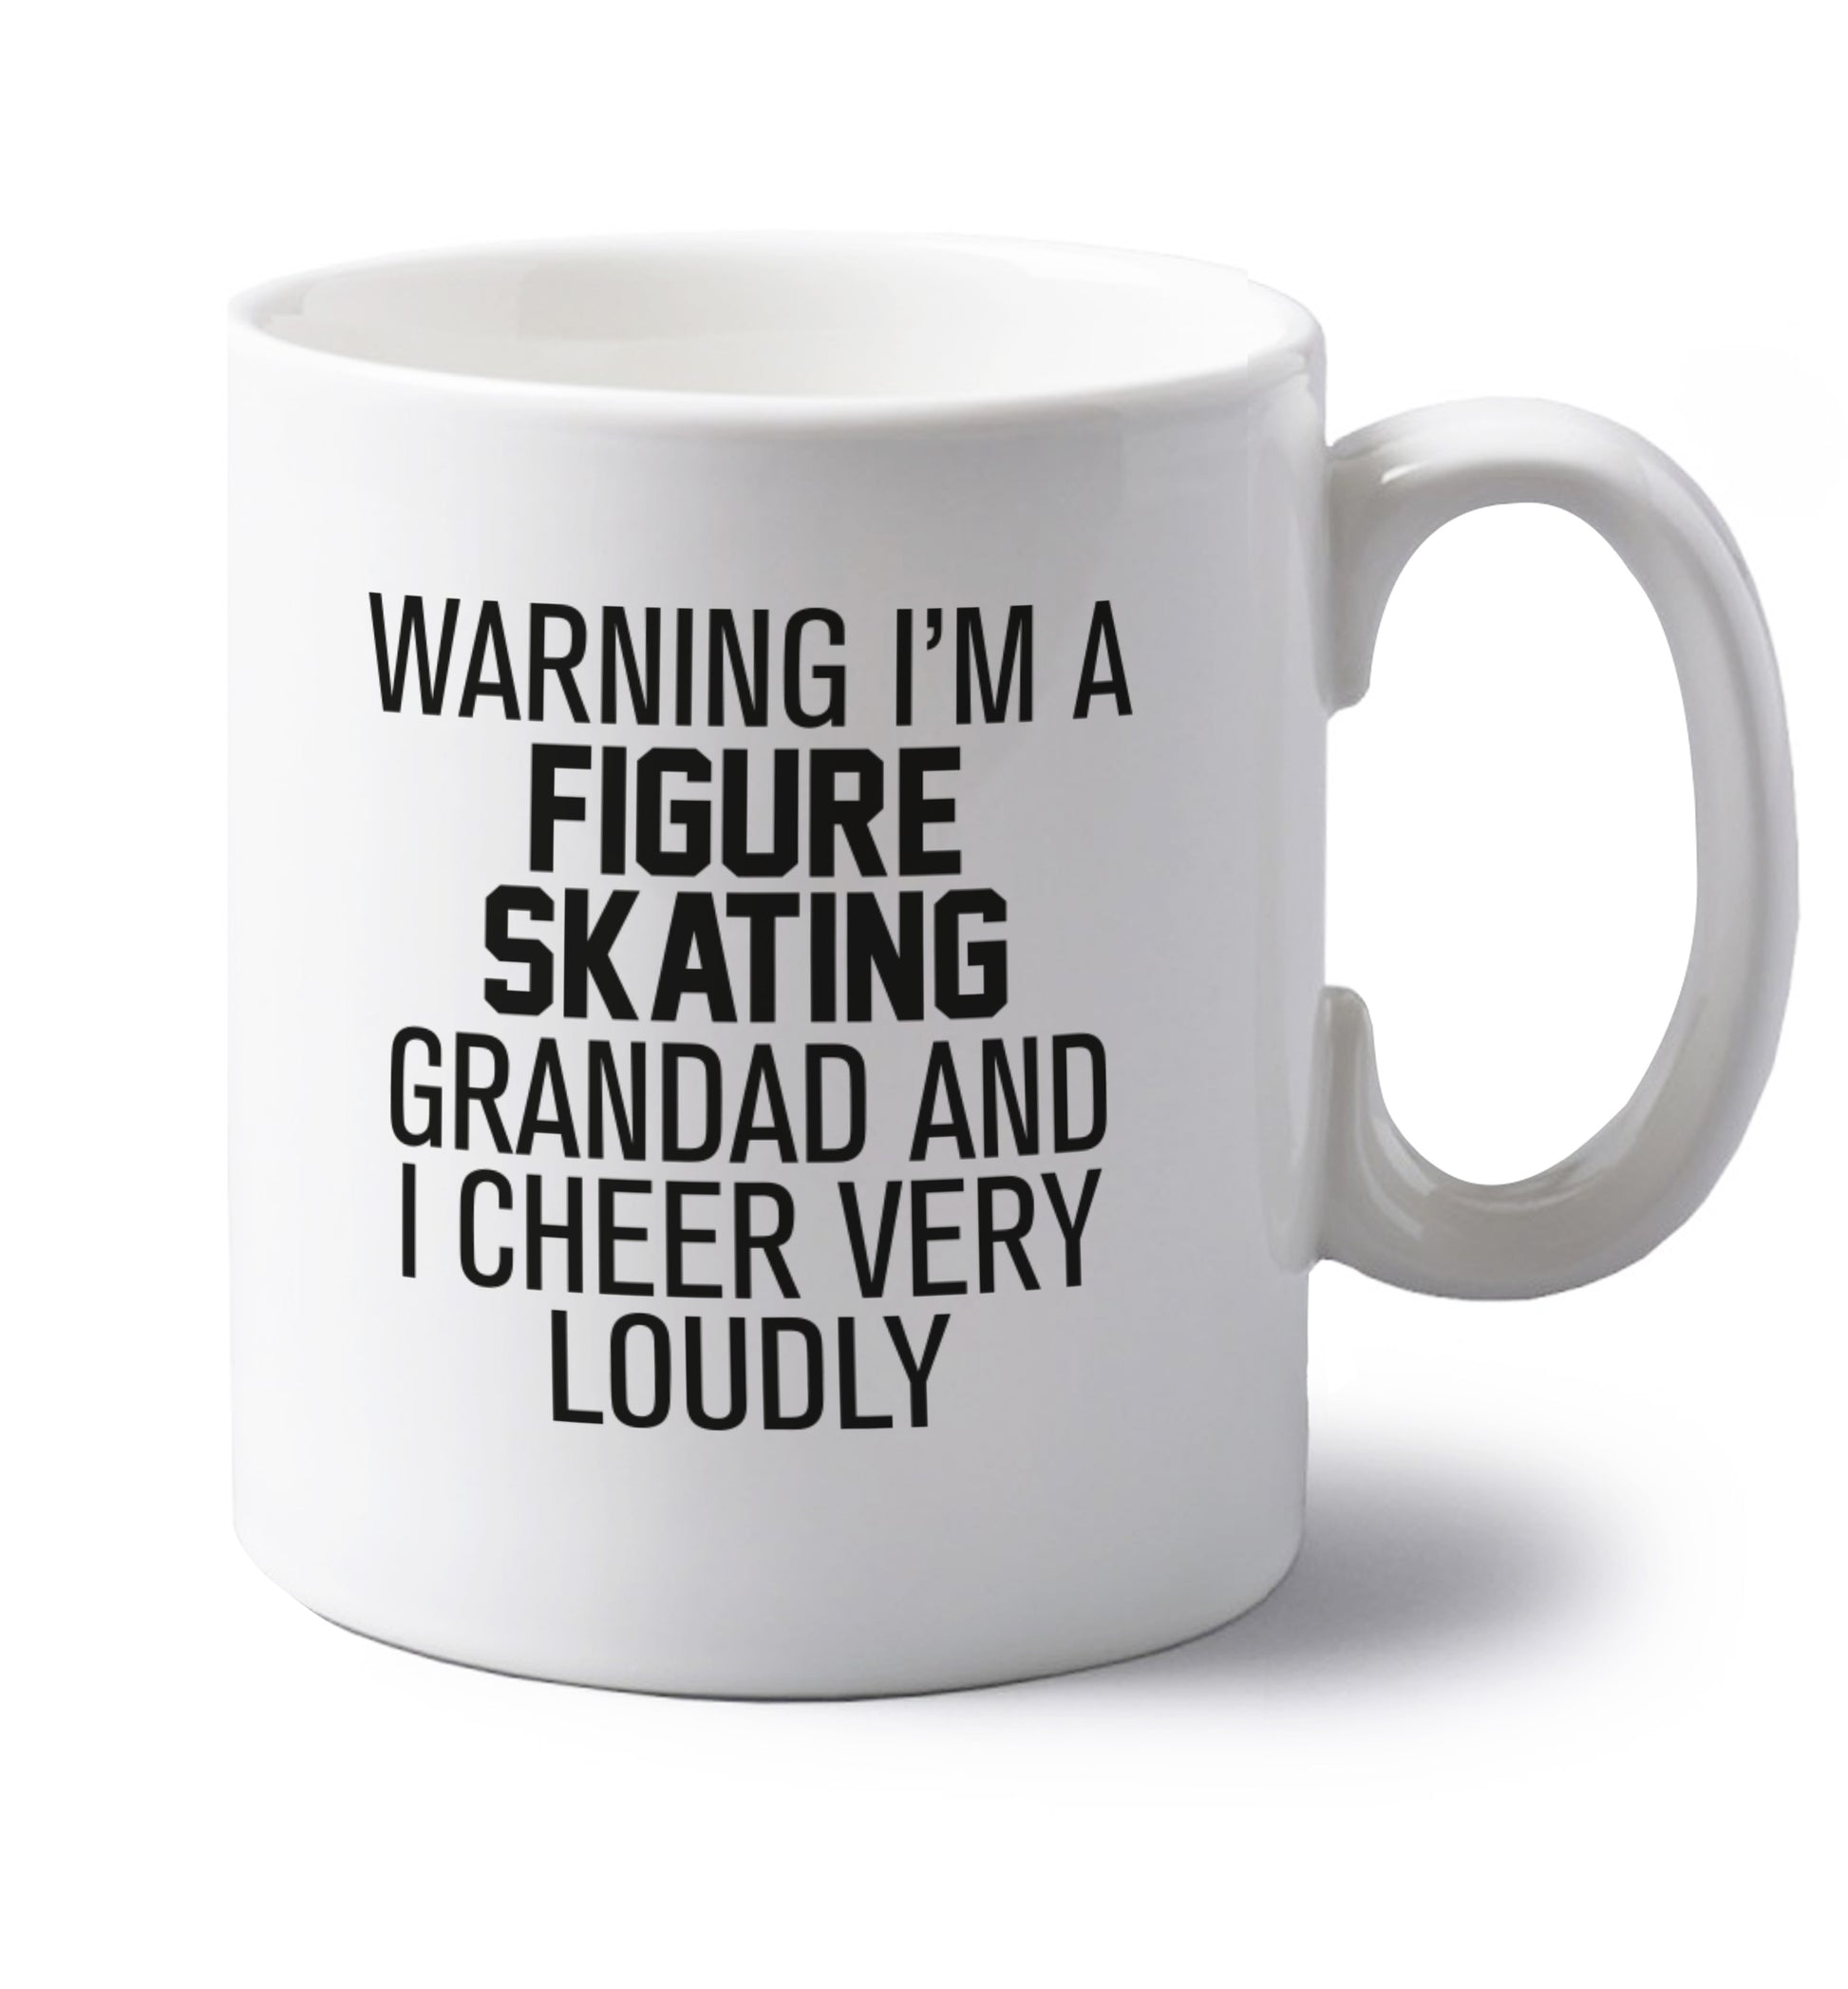 Warning I'm a figure skating grandad and I cheer very loudly left handed white ceramic mug 